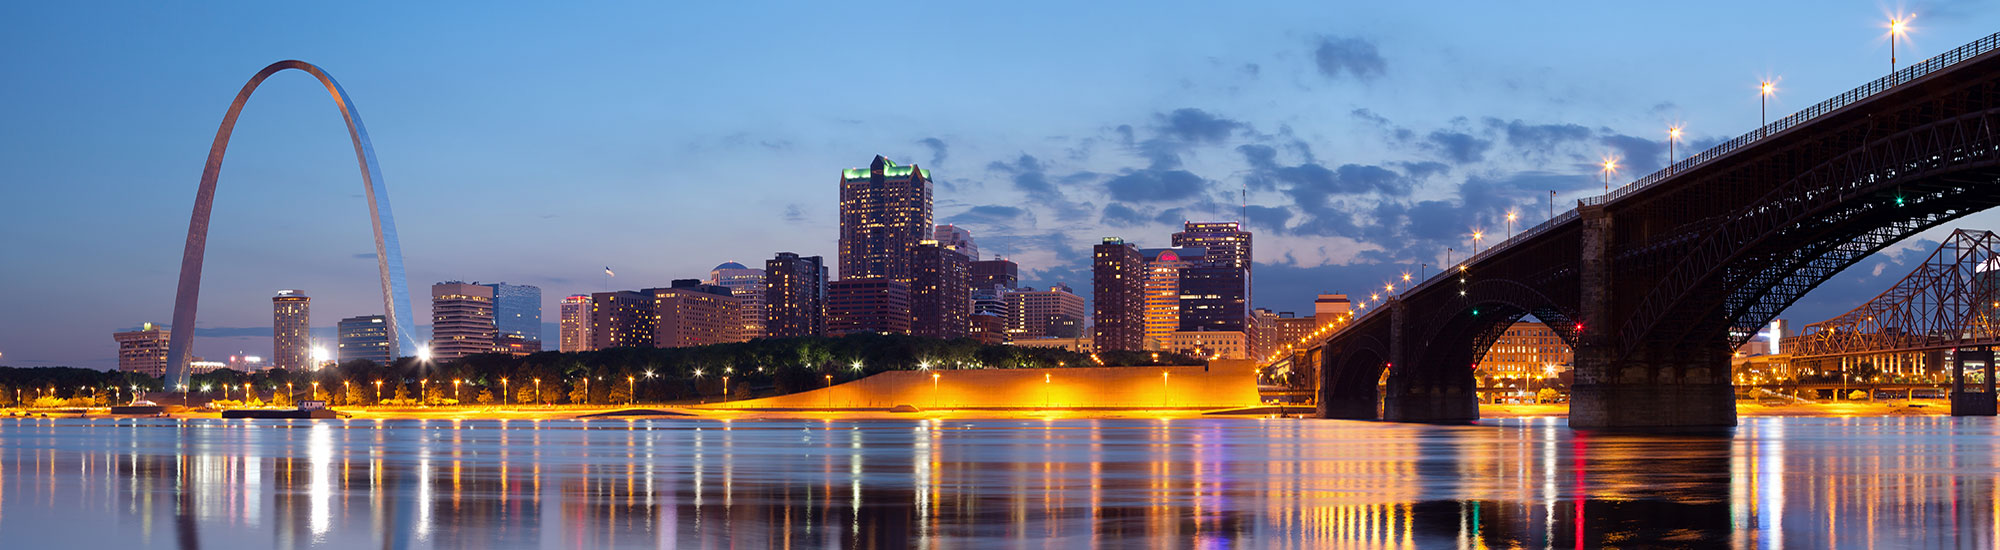 St. Louis MO skyline